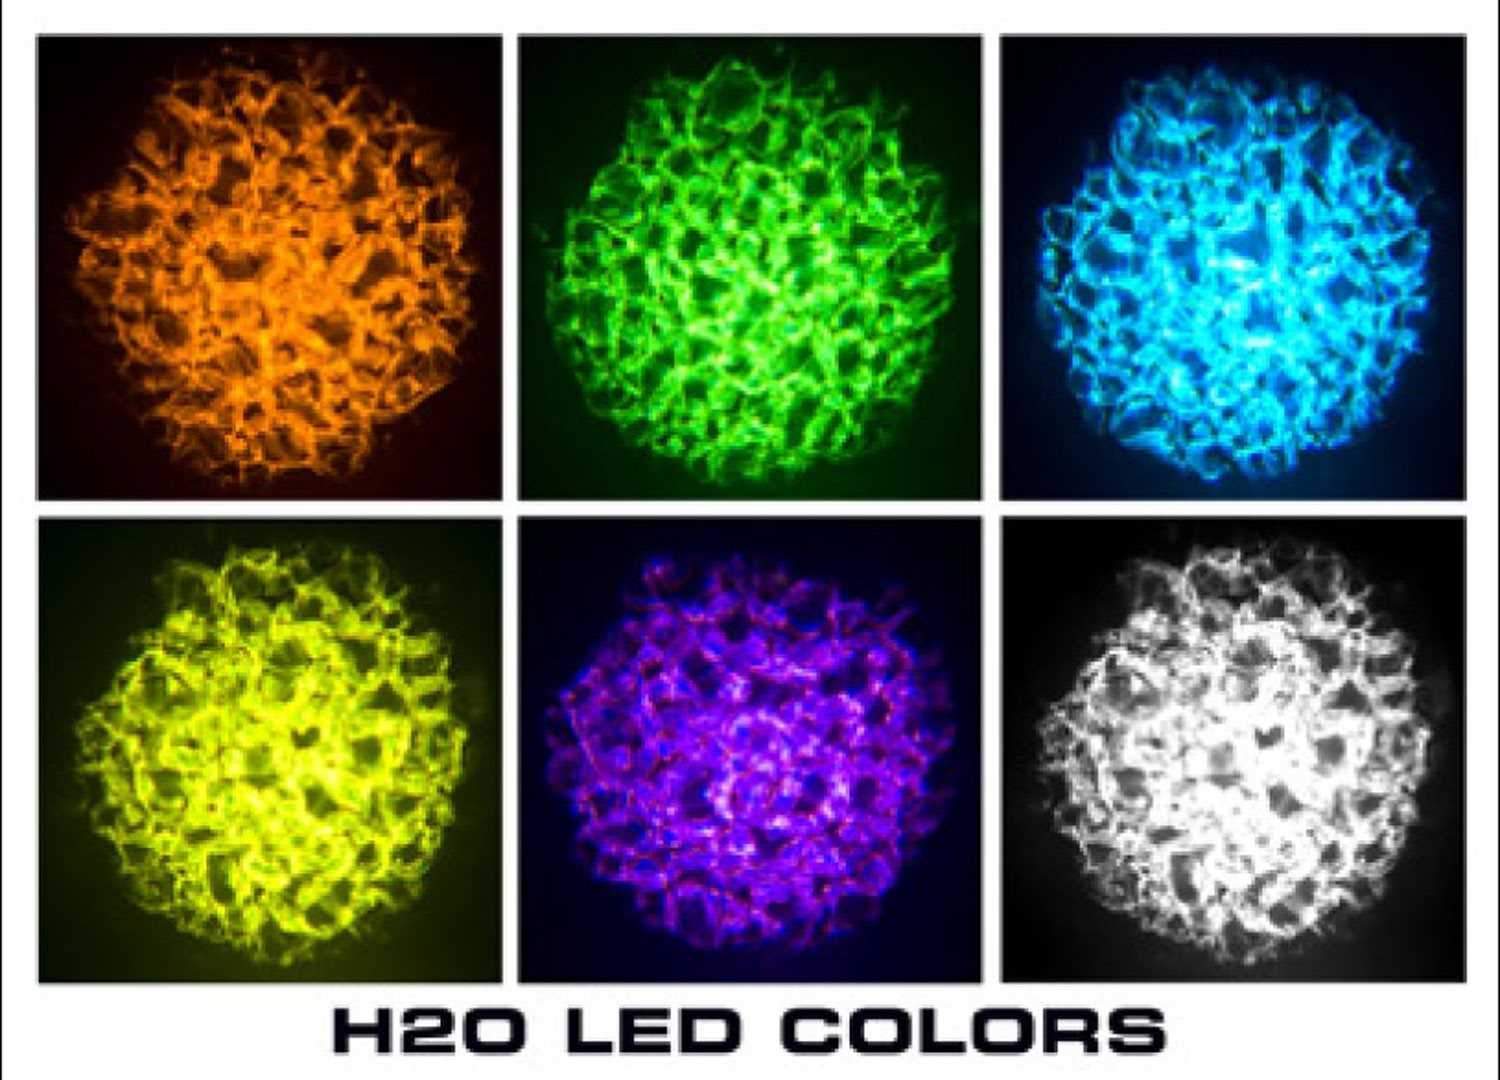 ADJ American DJ H2O LED IR 12-Watt Water Effect Light - ProSound and Stage Lighting